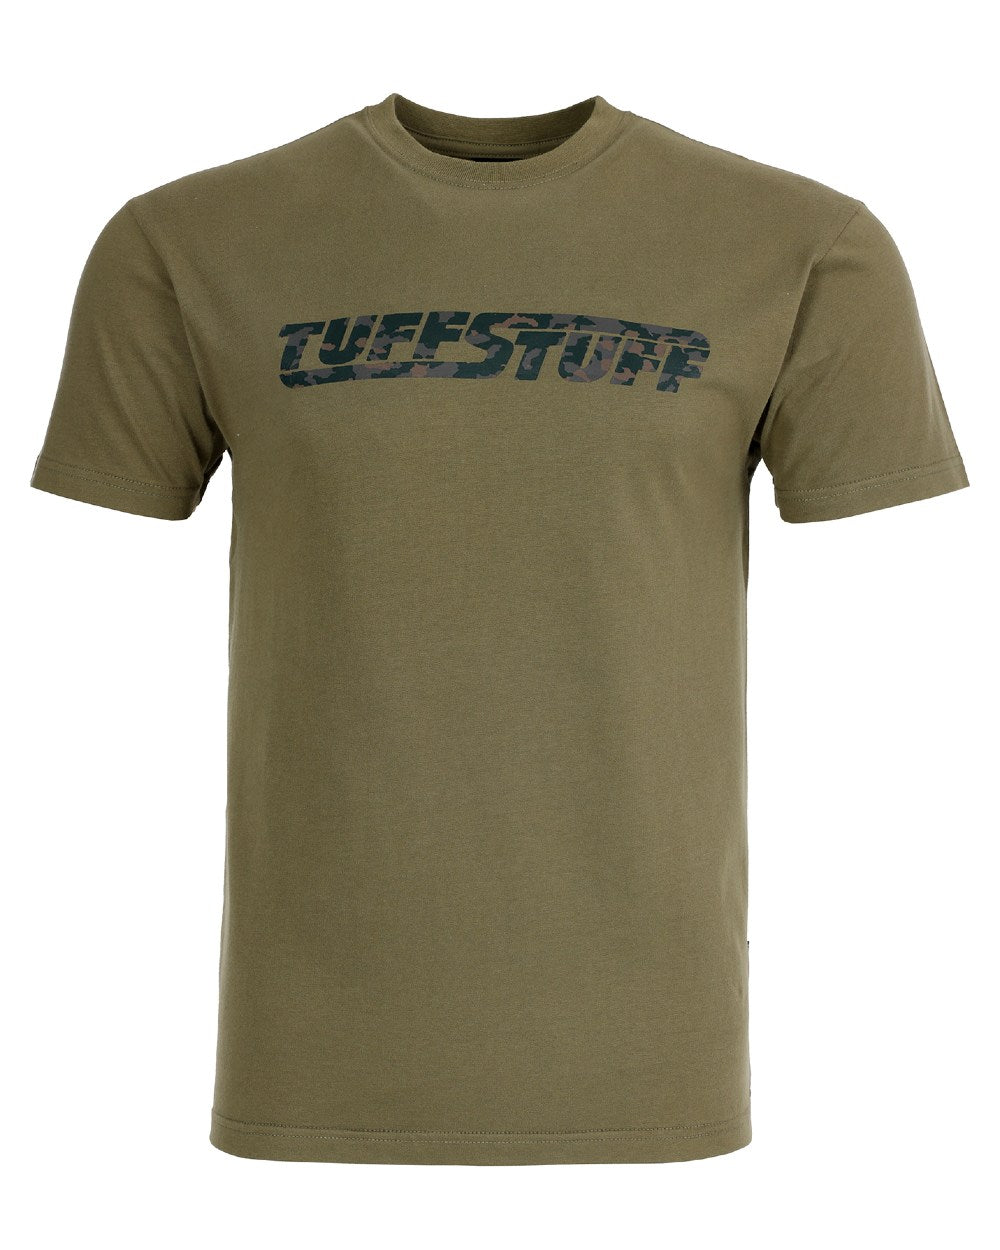 Olive coloured TuffStuff Logo T-Shirt on white background 